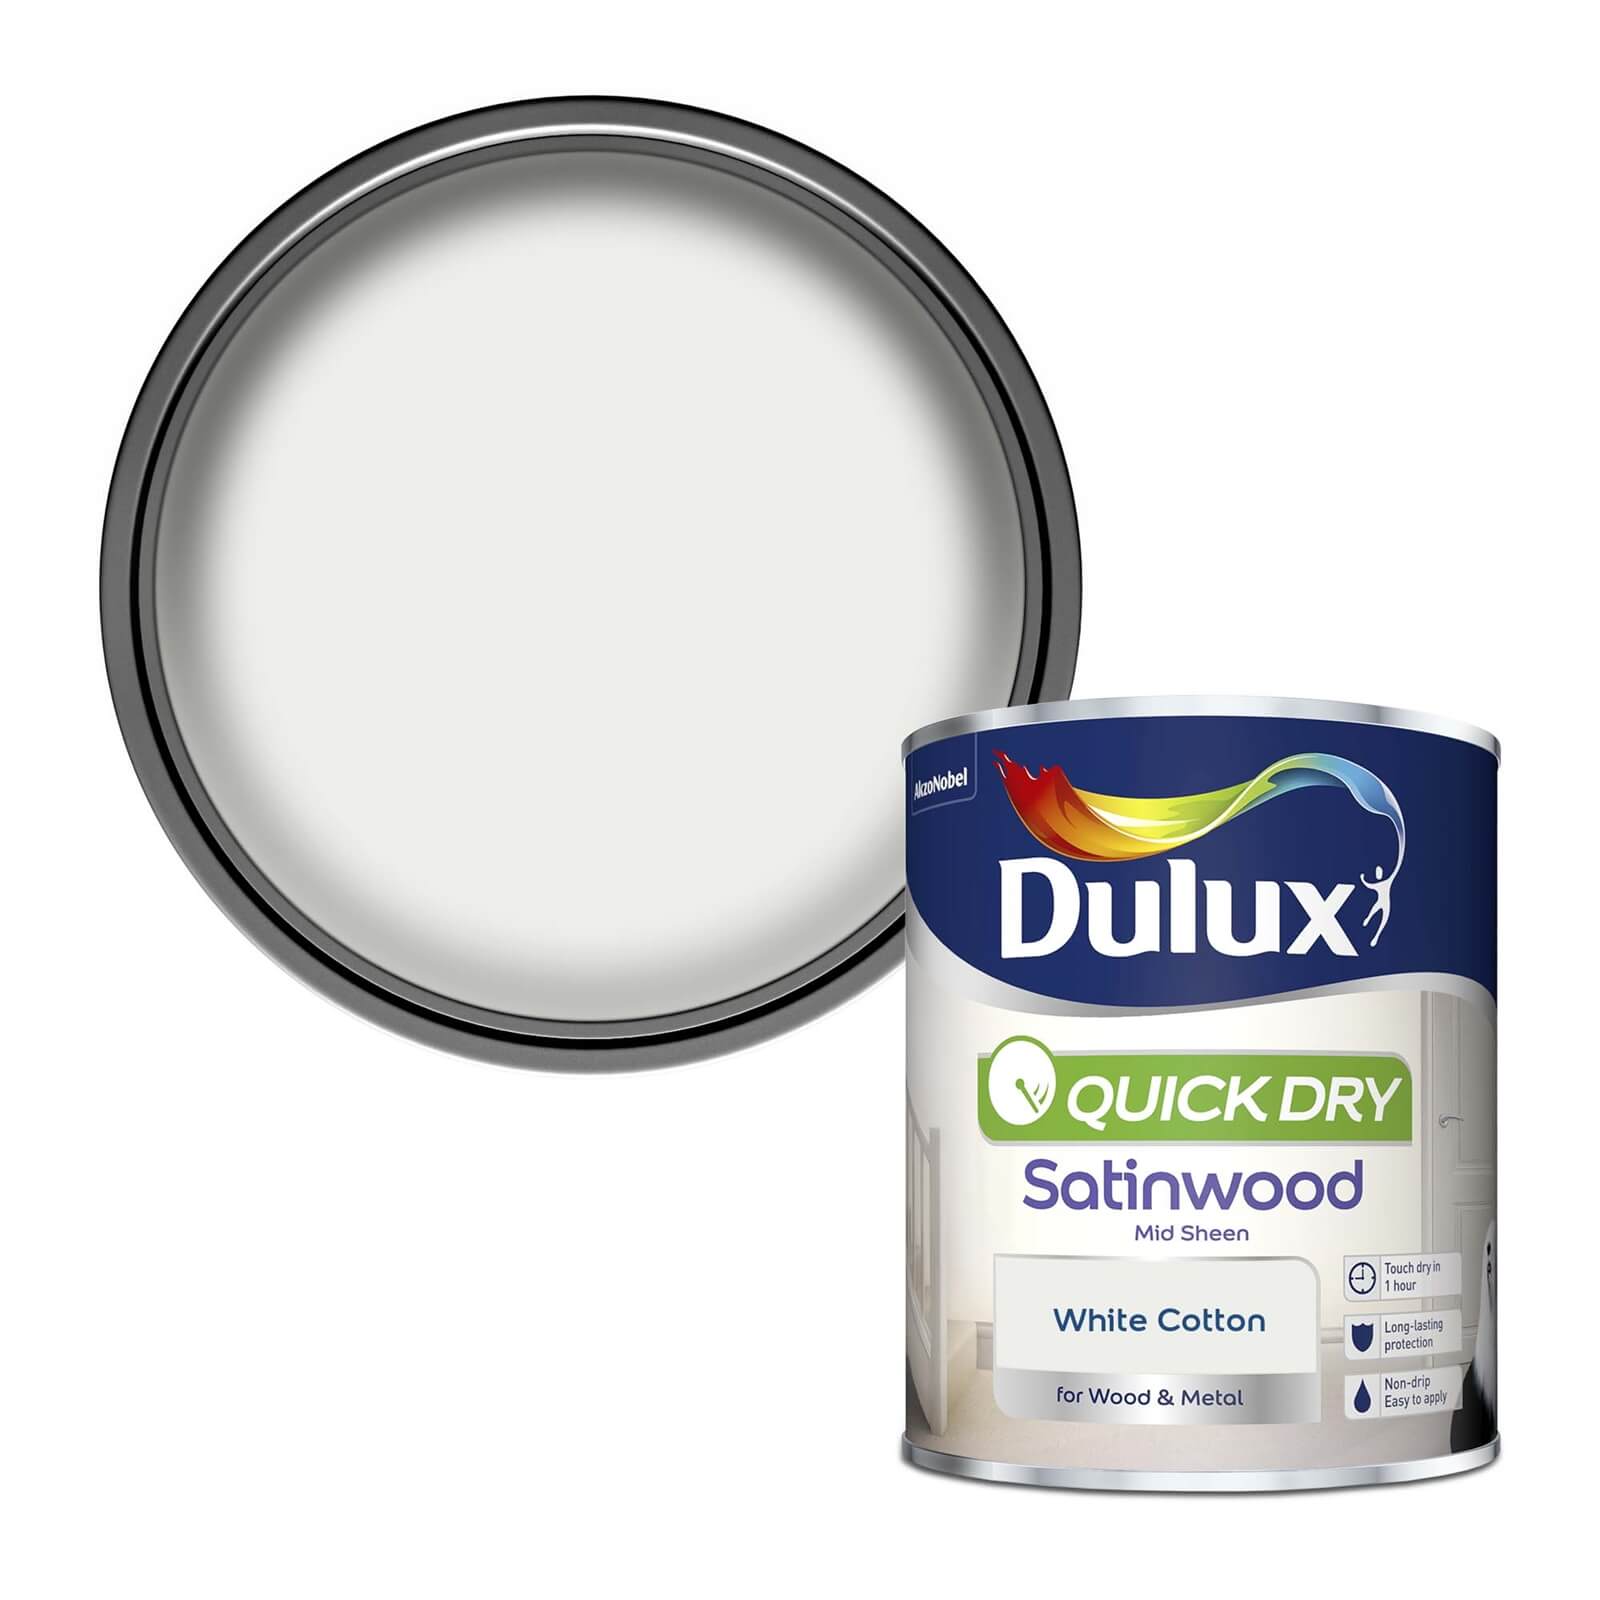 Dulux Quick Dry Satinwood White Cotton - 750ml